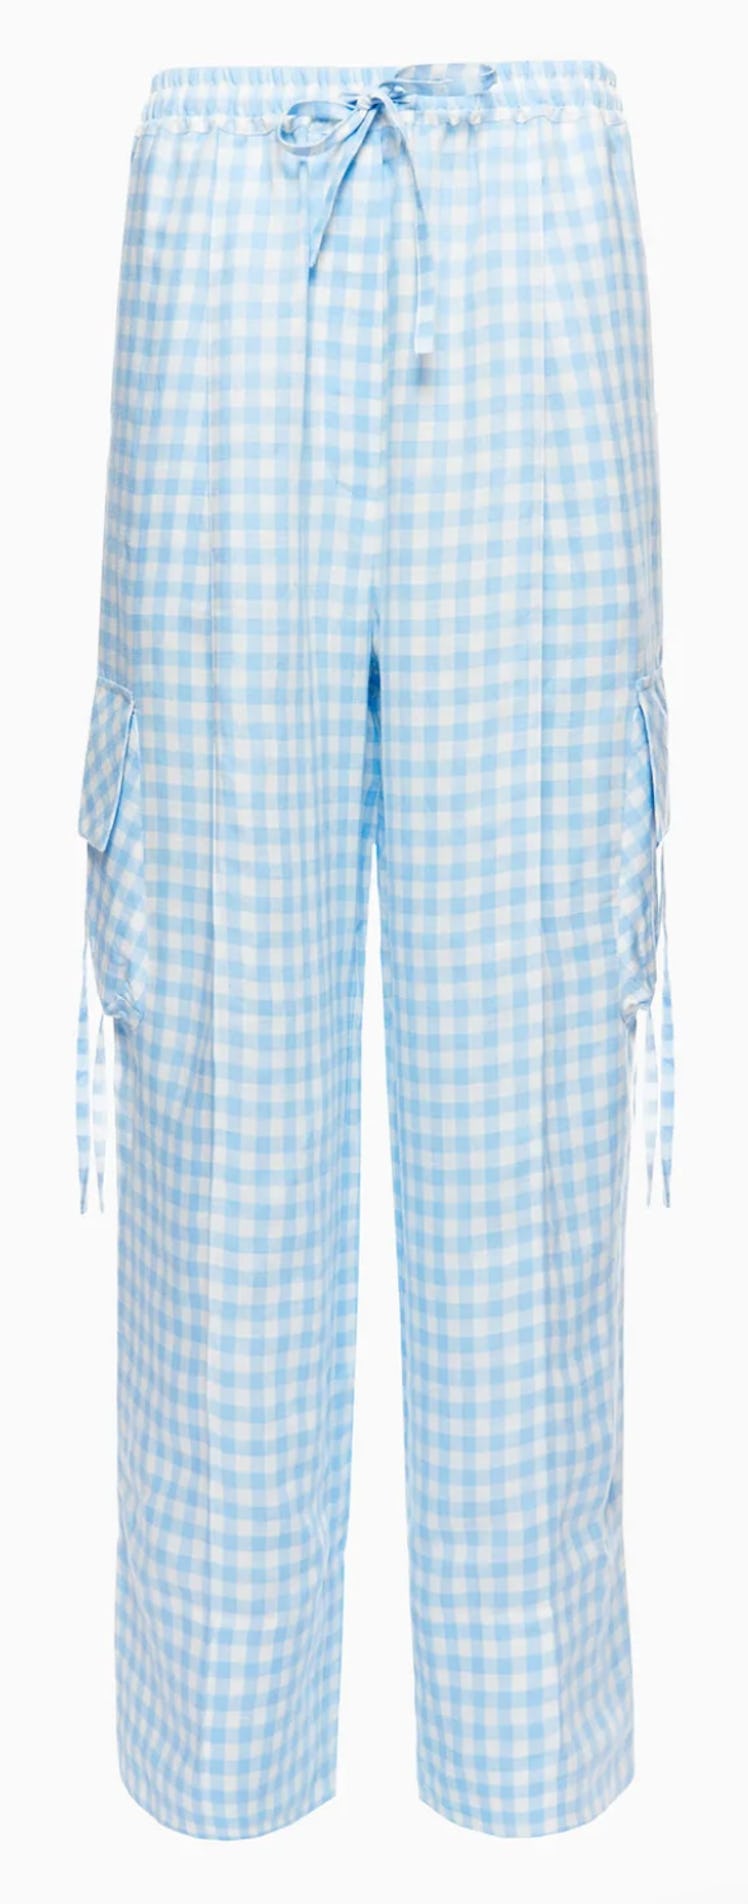 blue gingham pajama pants